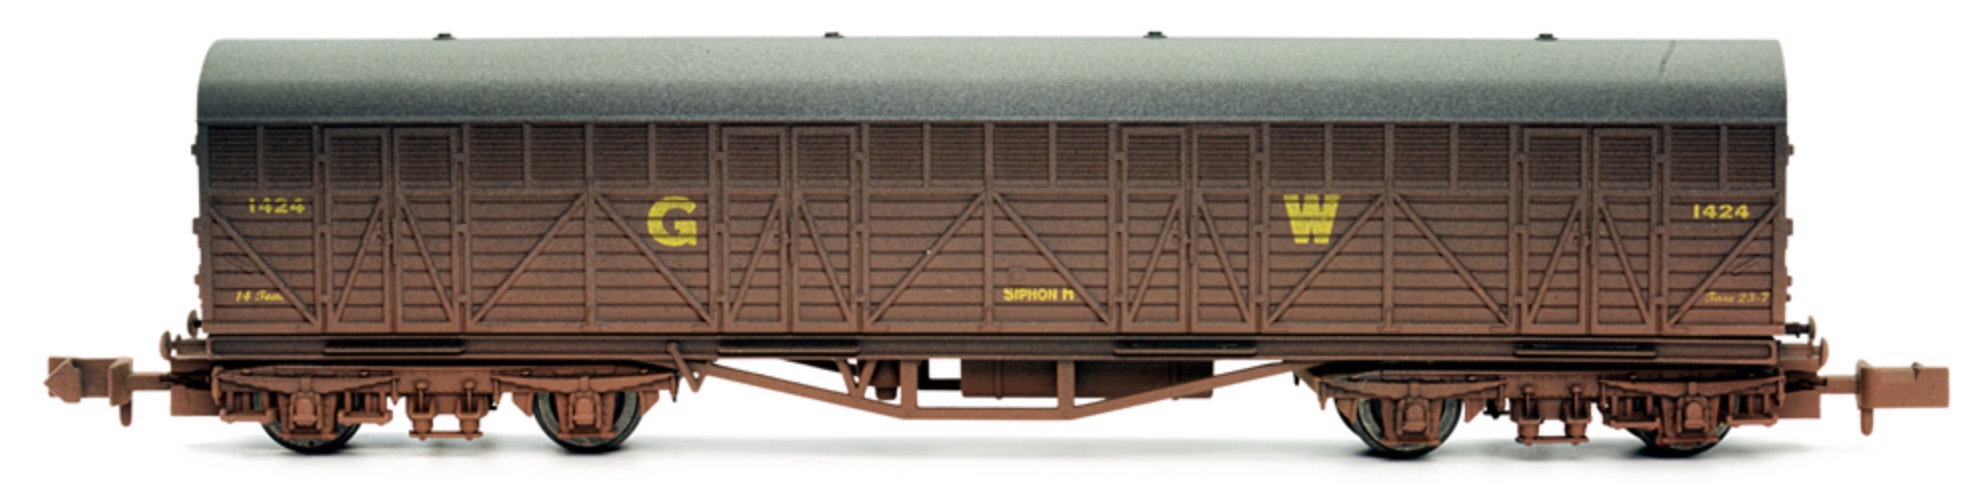 N Scale - Dapol - 2F-024-014 - Siphon Wagon, Wood, G-Series - Great Western - 1454